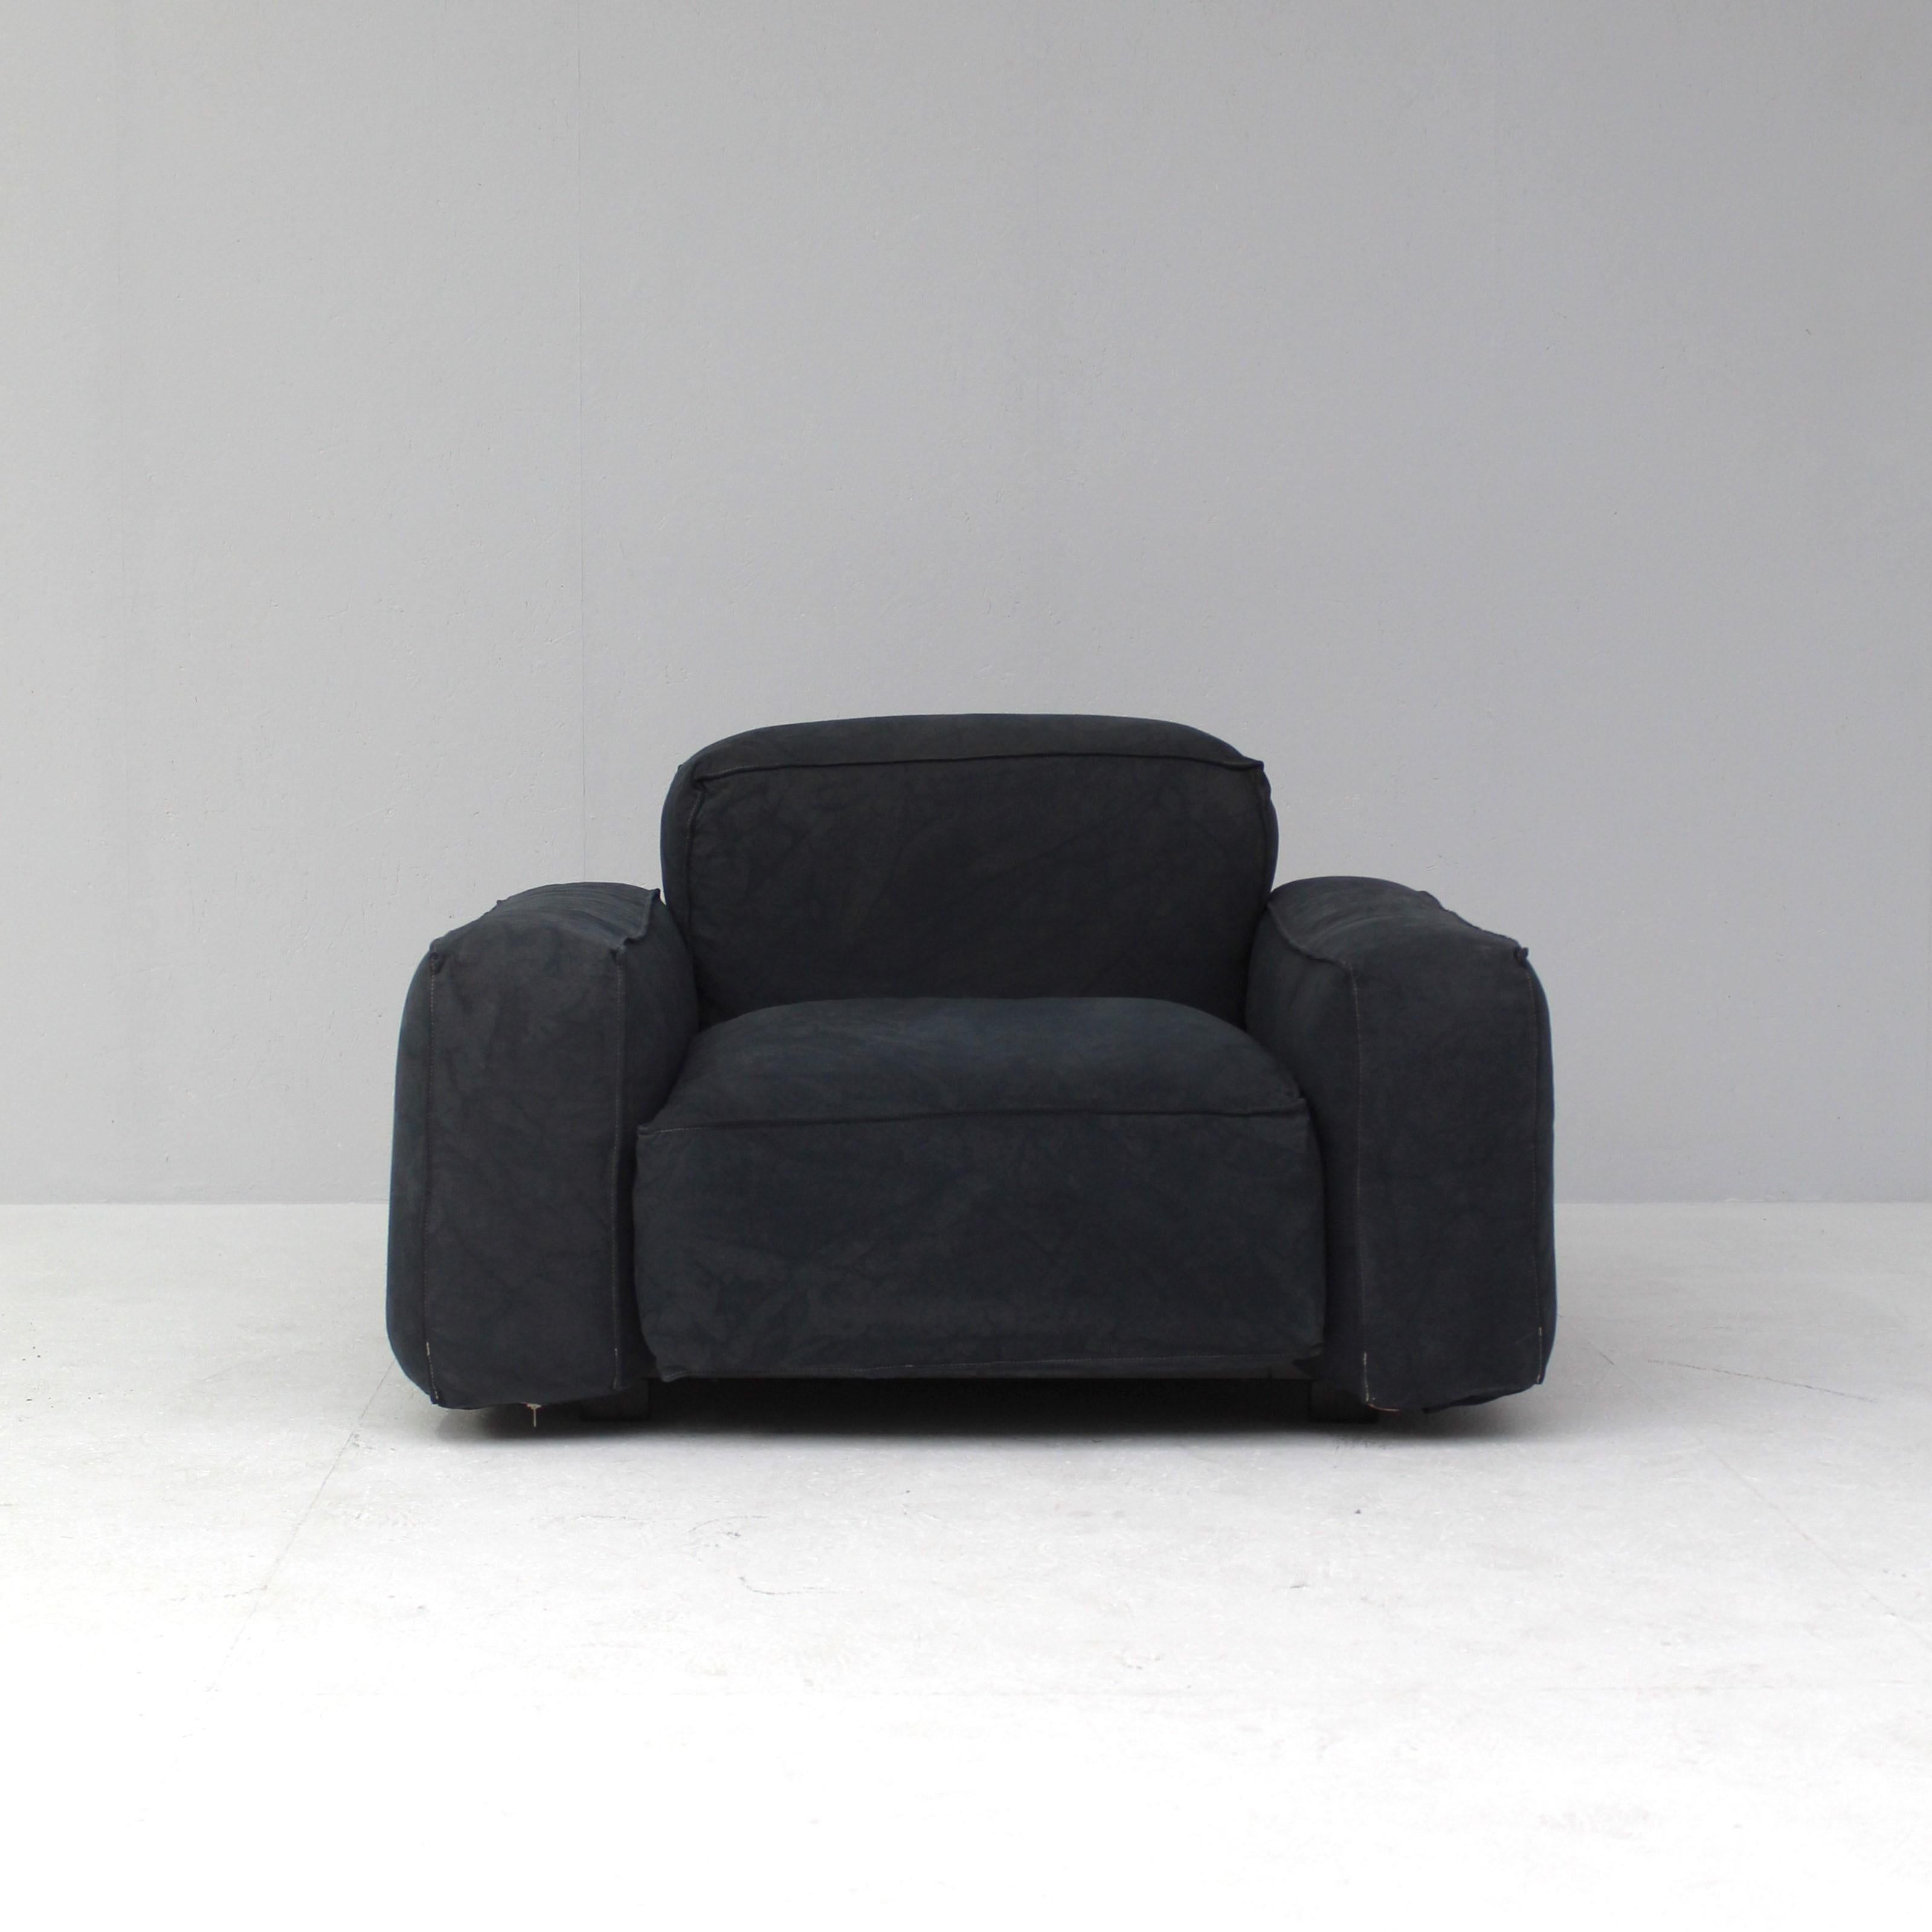 Metal Marechiaro sofa set by Mario Marenco for Arflex For Sale